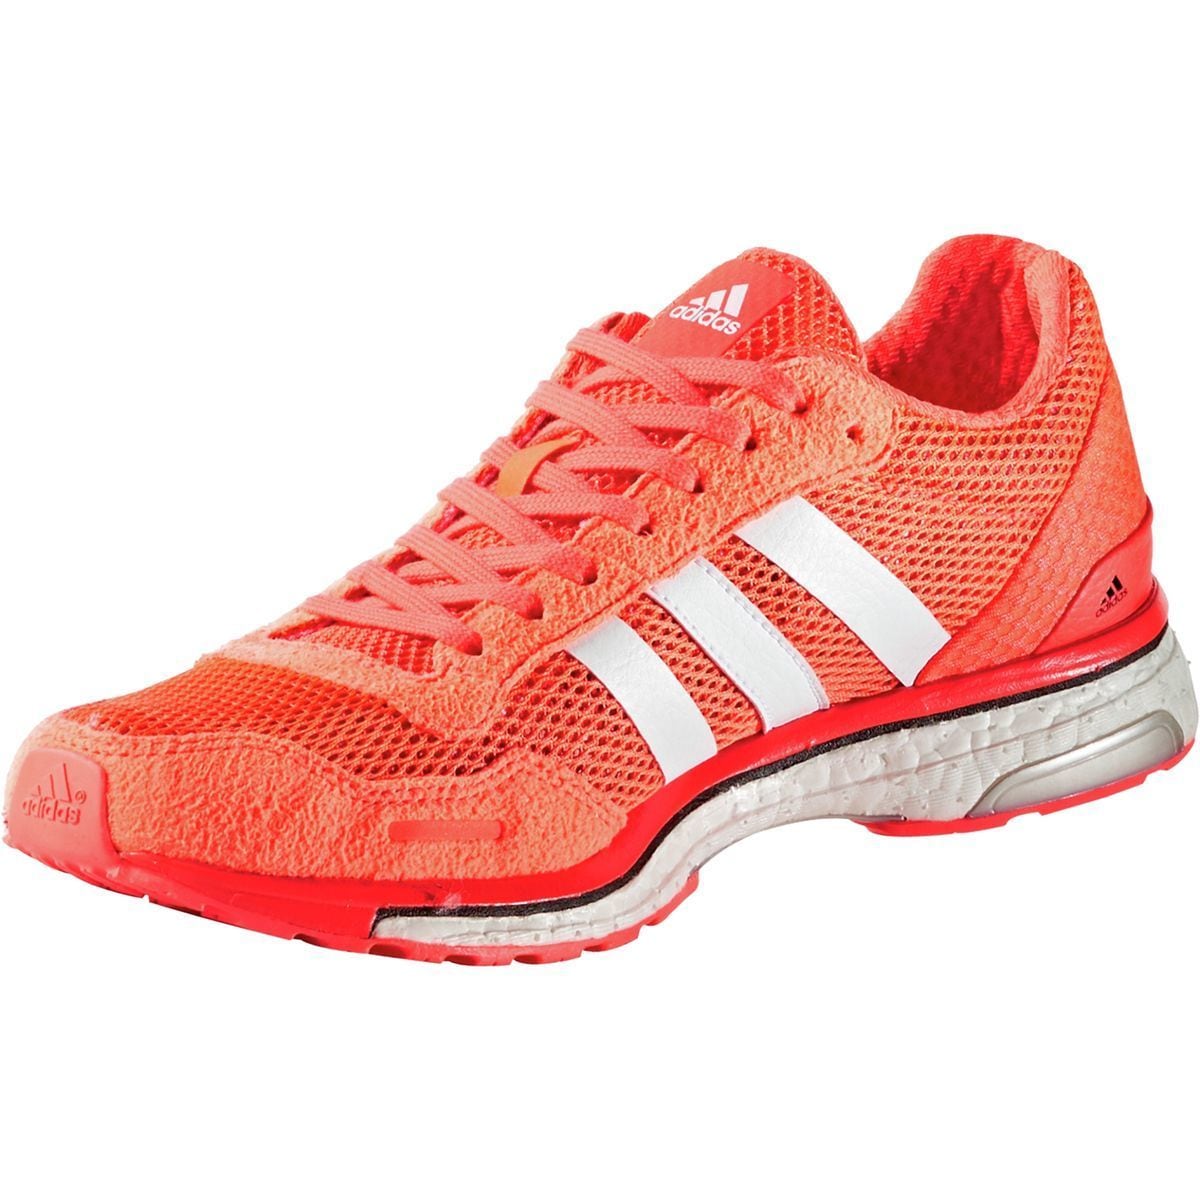 Adidas Adizero Adios 3 Boost Running Shoe - Women's - Footwear